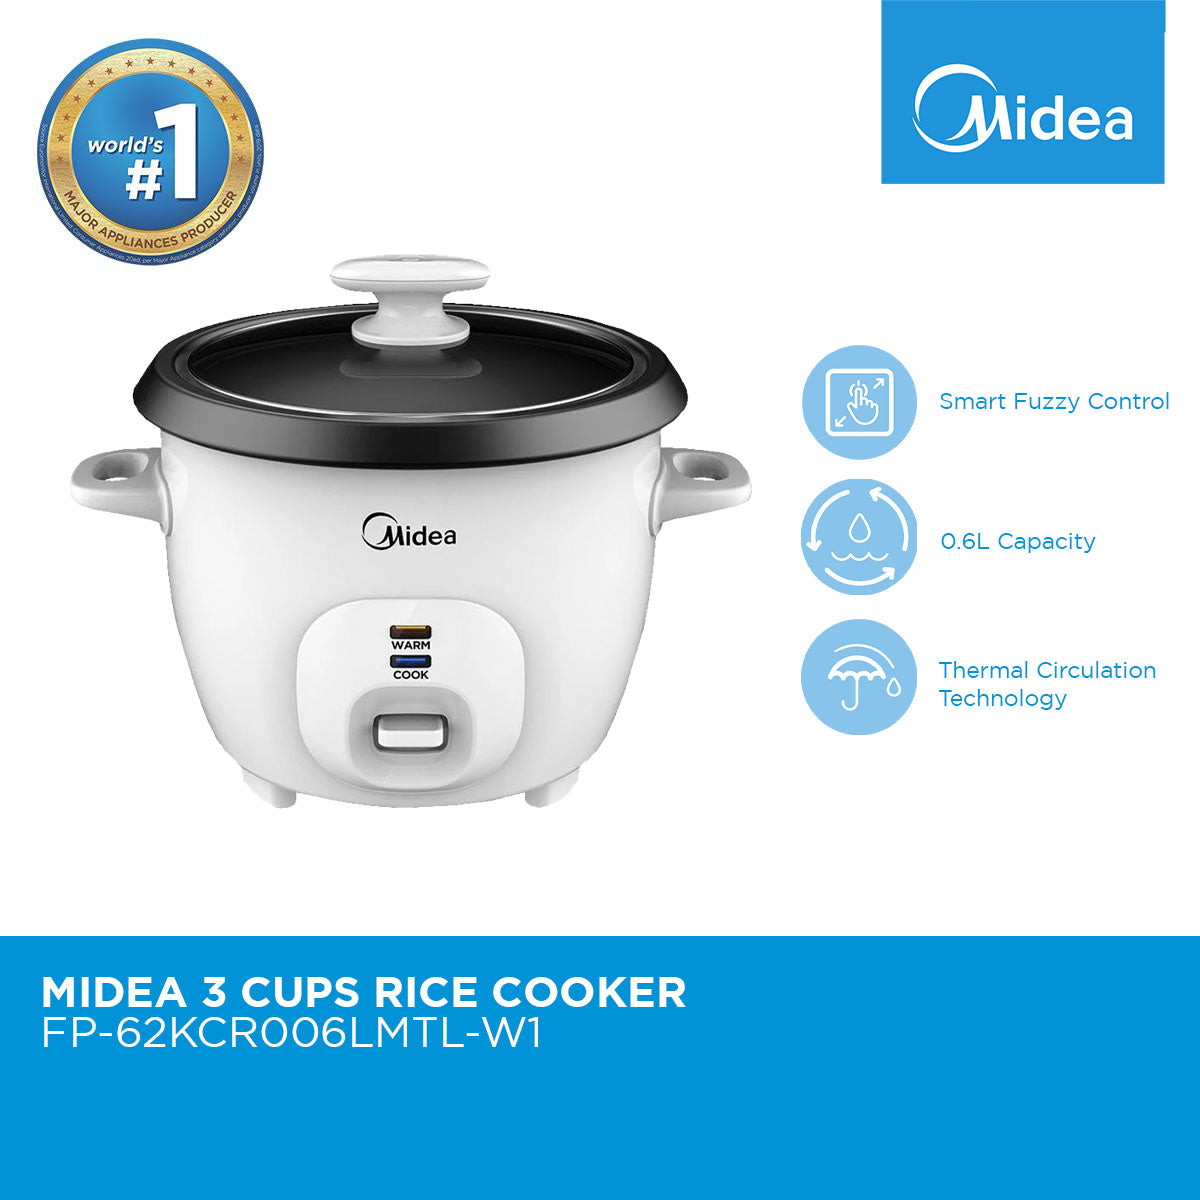 Midea 3 Cups Rice Cooker